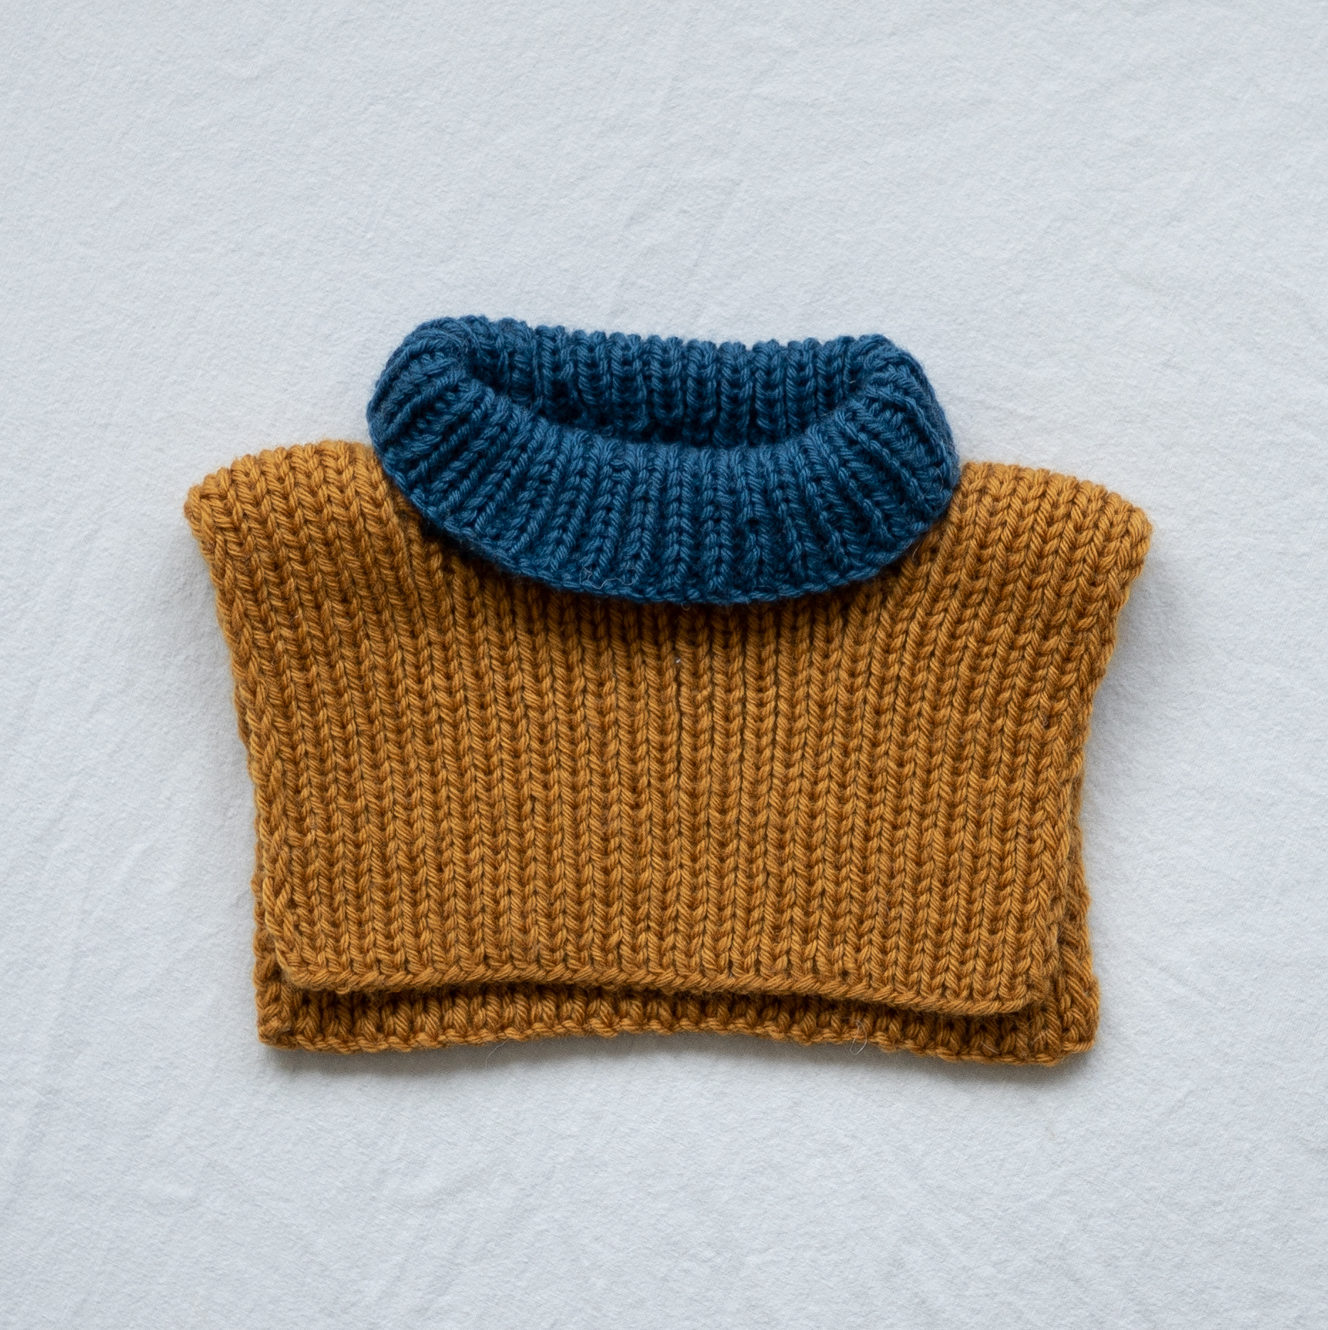  - POP neck kids | Knitted neck warmer | Knitting kit merino - by HipKnitShop - 08/10/2020